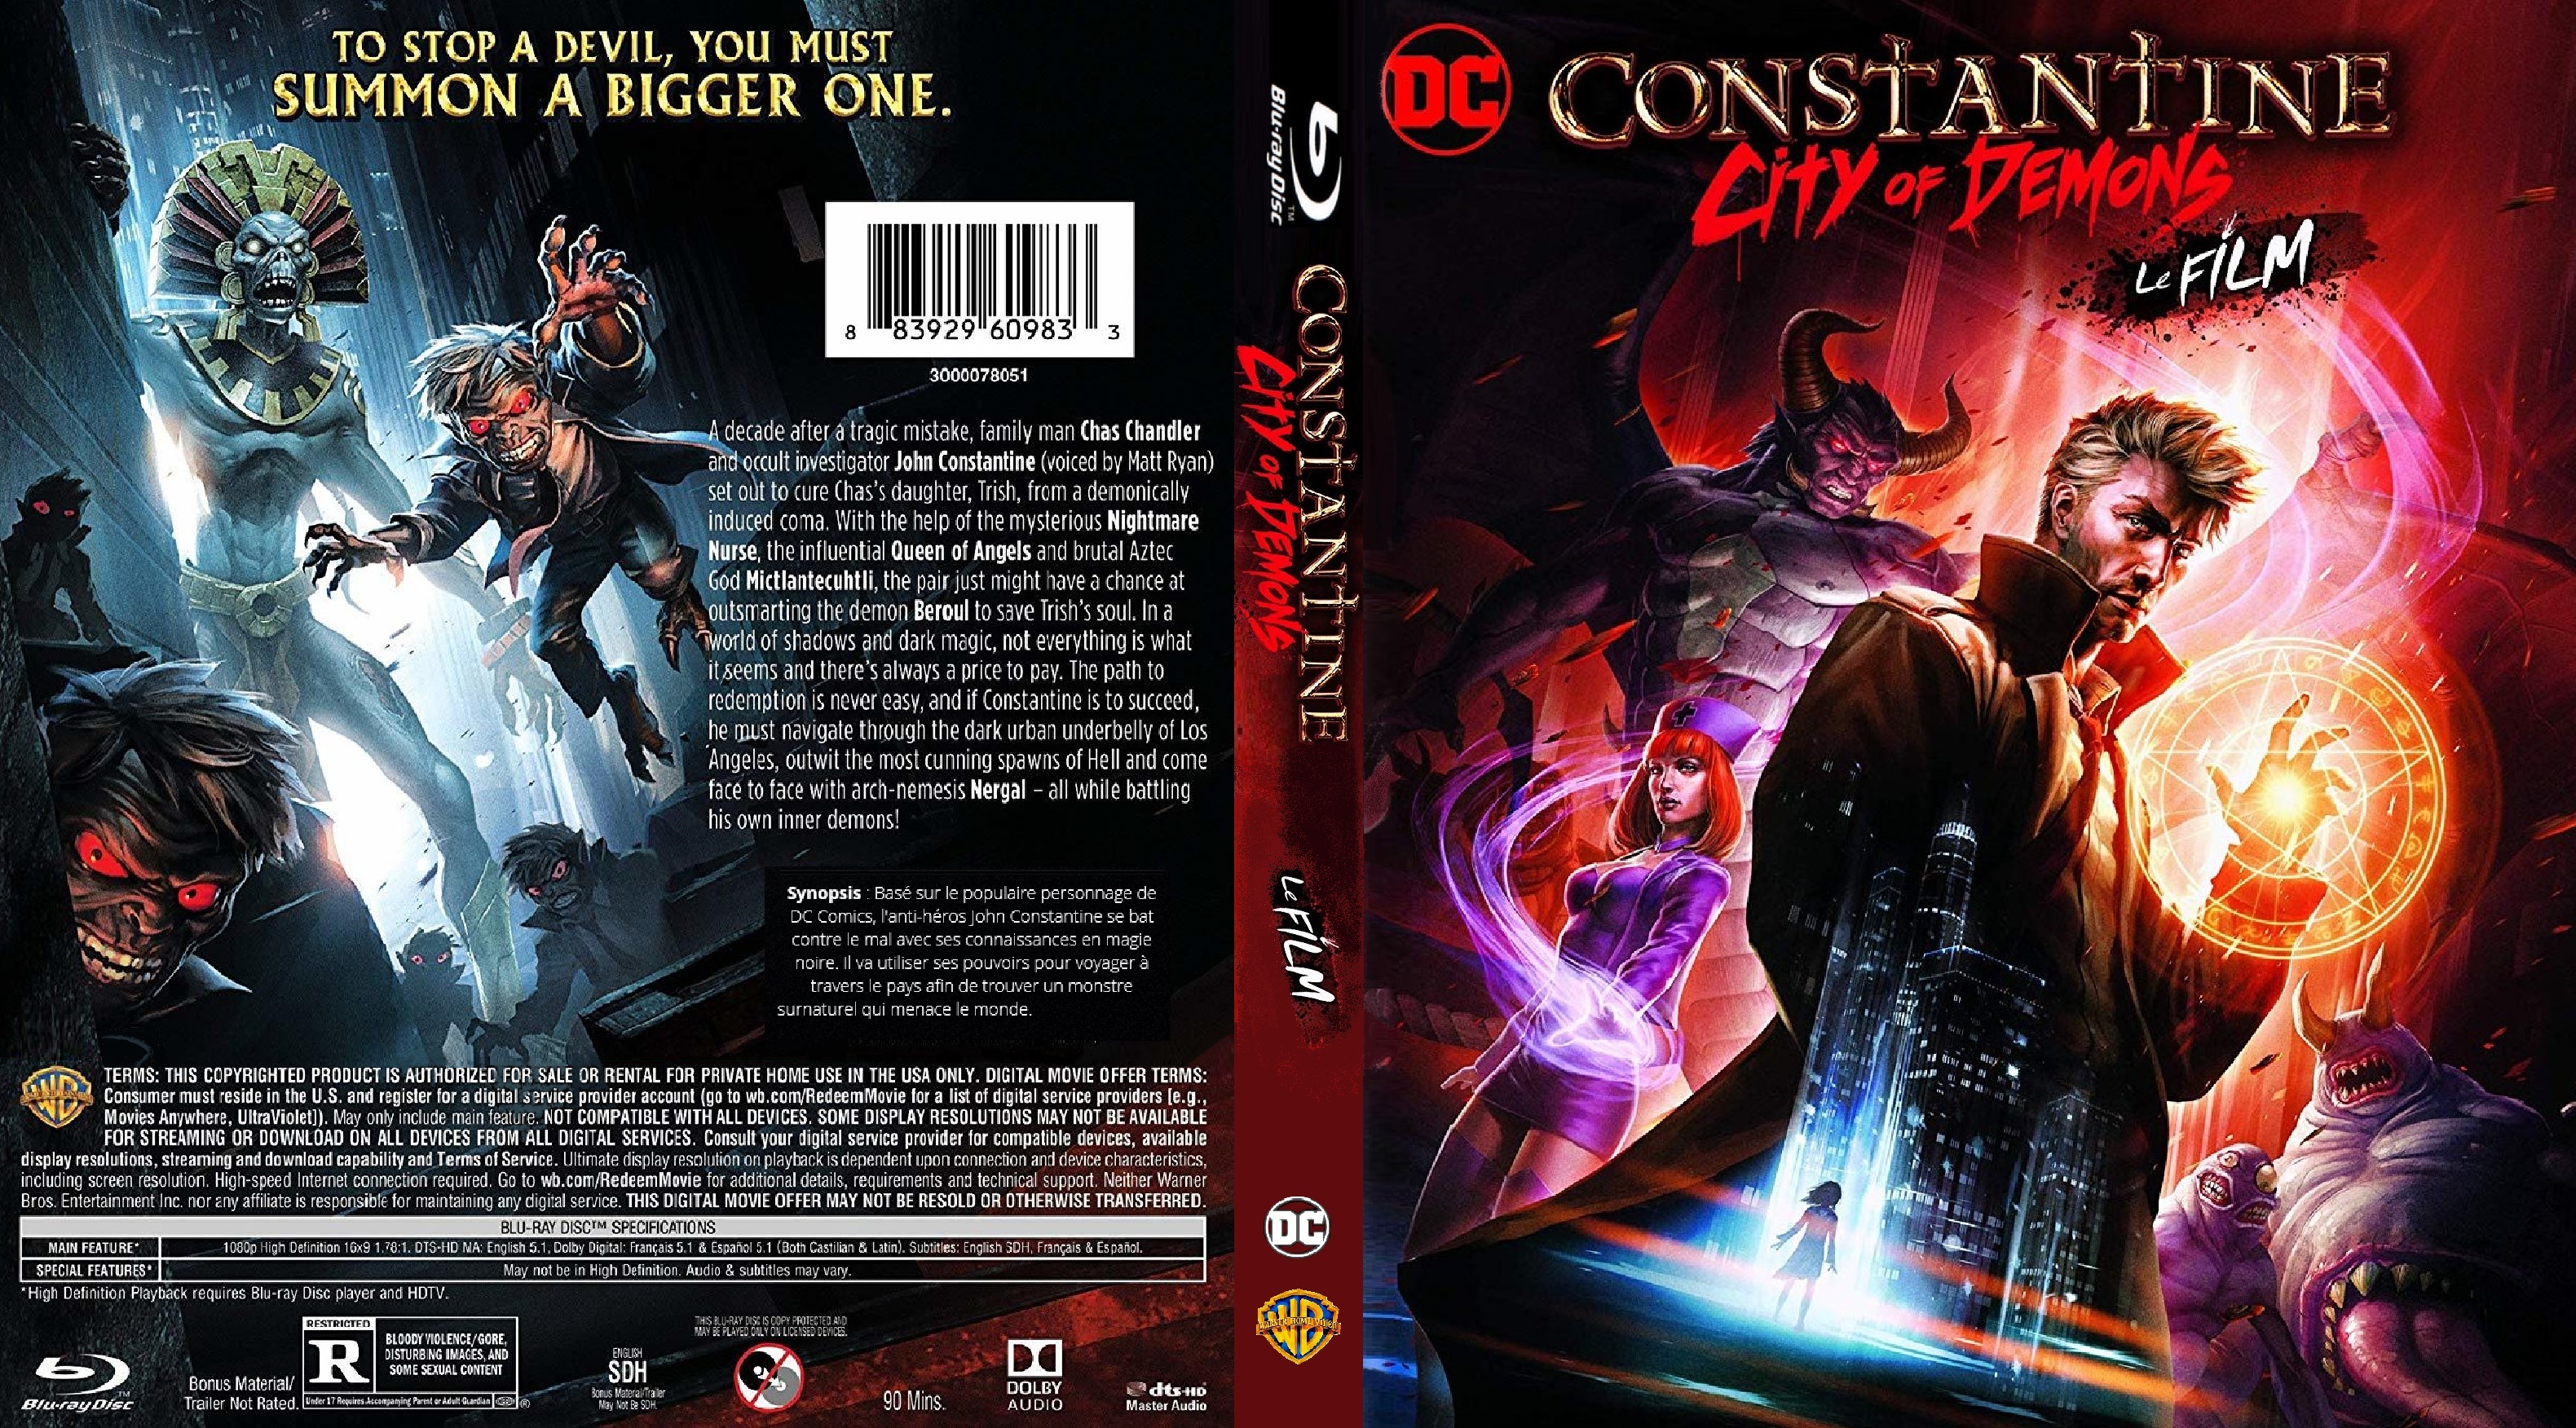 Jaquette DVD Constantine City of demons custom (BLU-RAY)